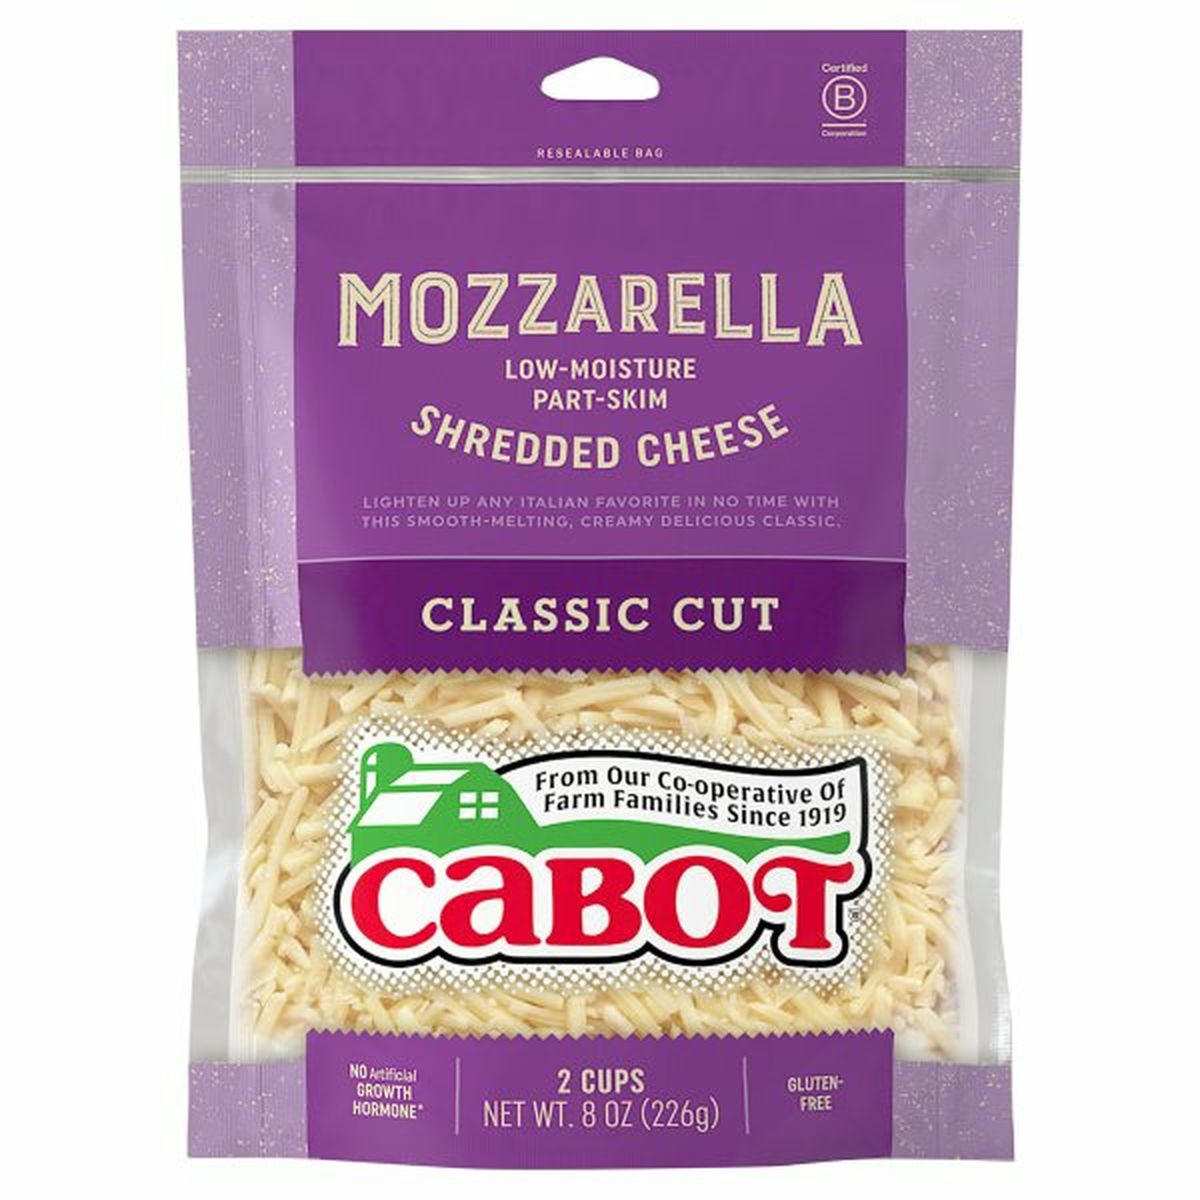 Calories in Cabot Shredded Cheese, Part-Skim, Low-Moisture, Mozzarella, Classic Cut